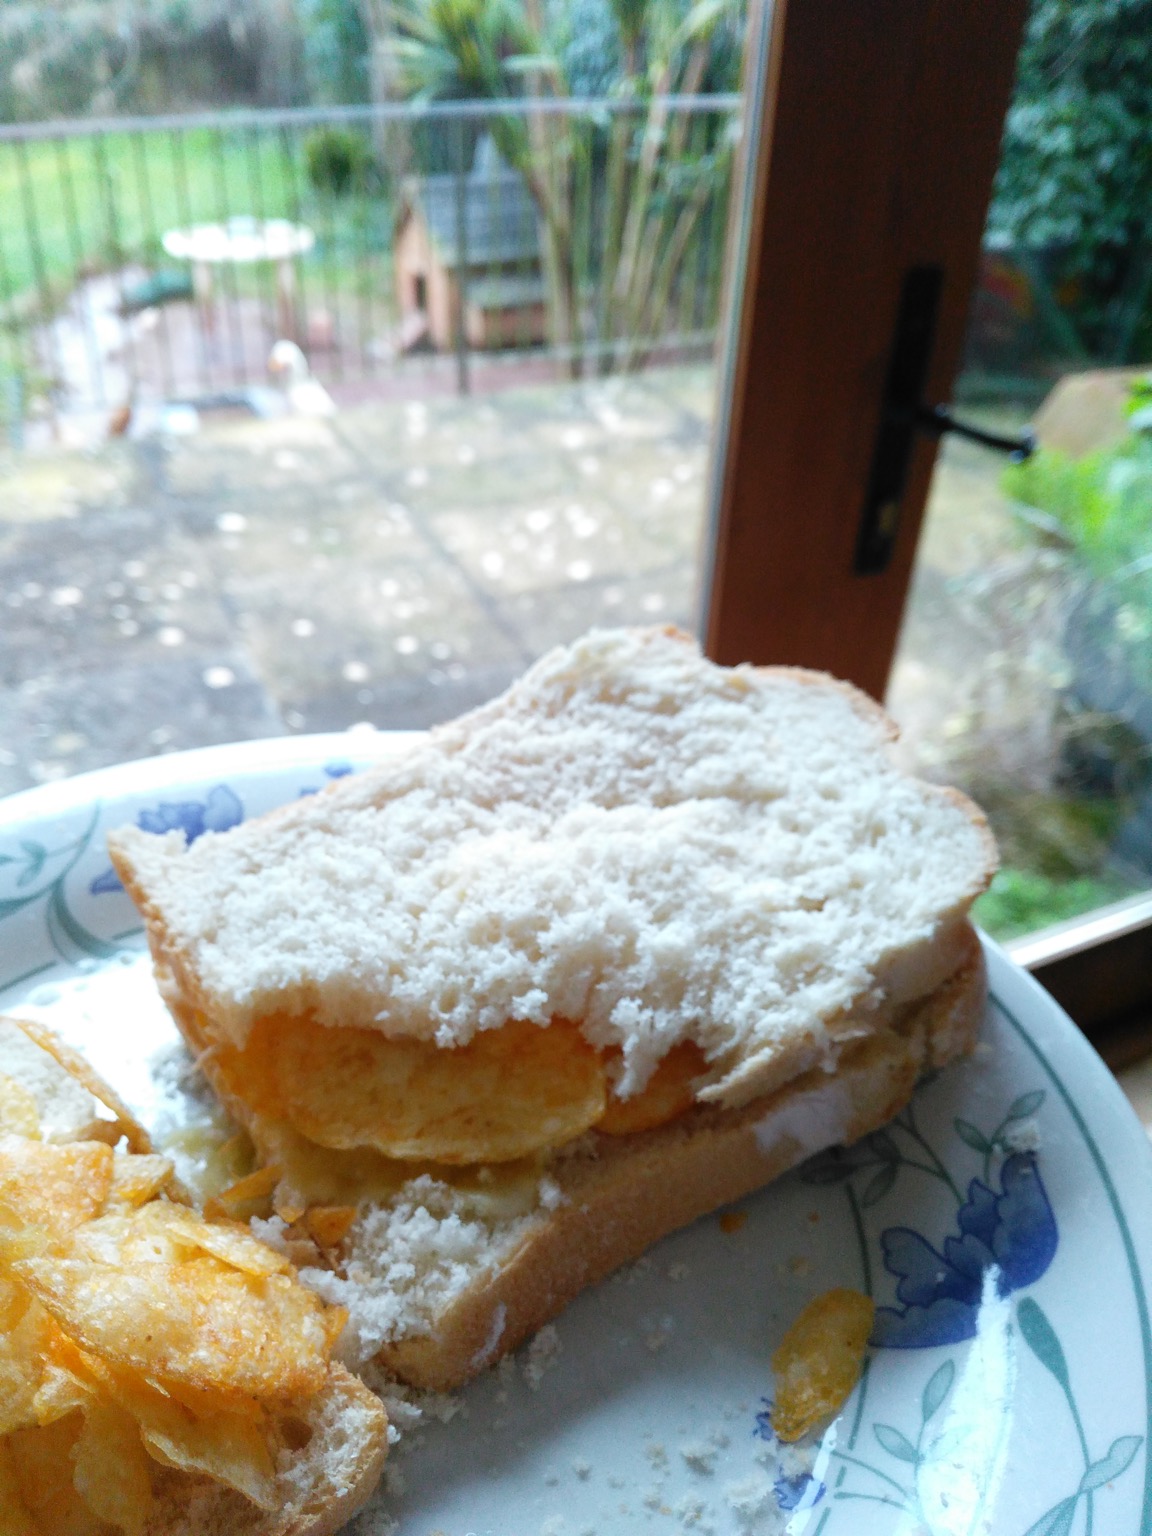 White crisp sandwich with a corner torn away